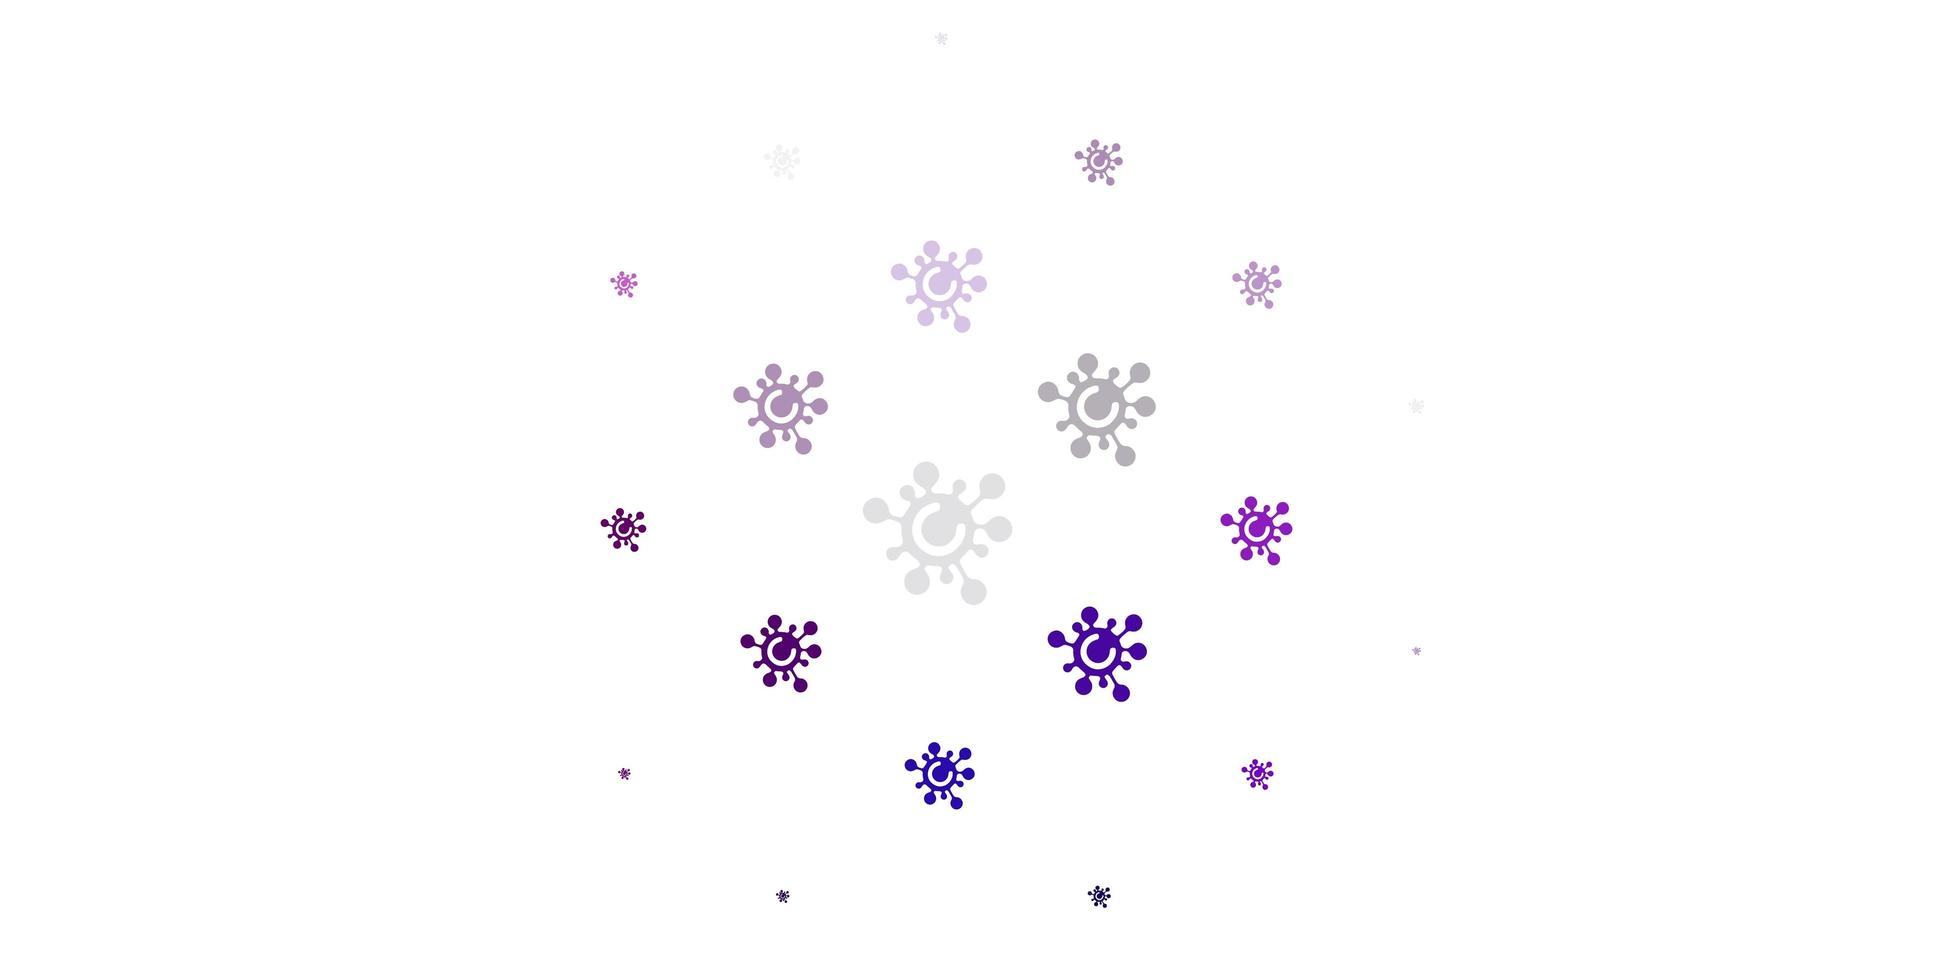 Telón de fondo de vector violeta claro con símbolos de virus.